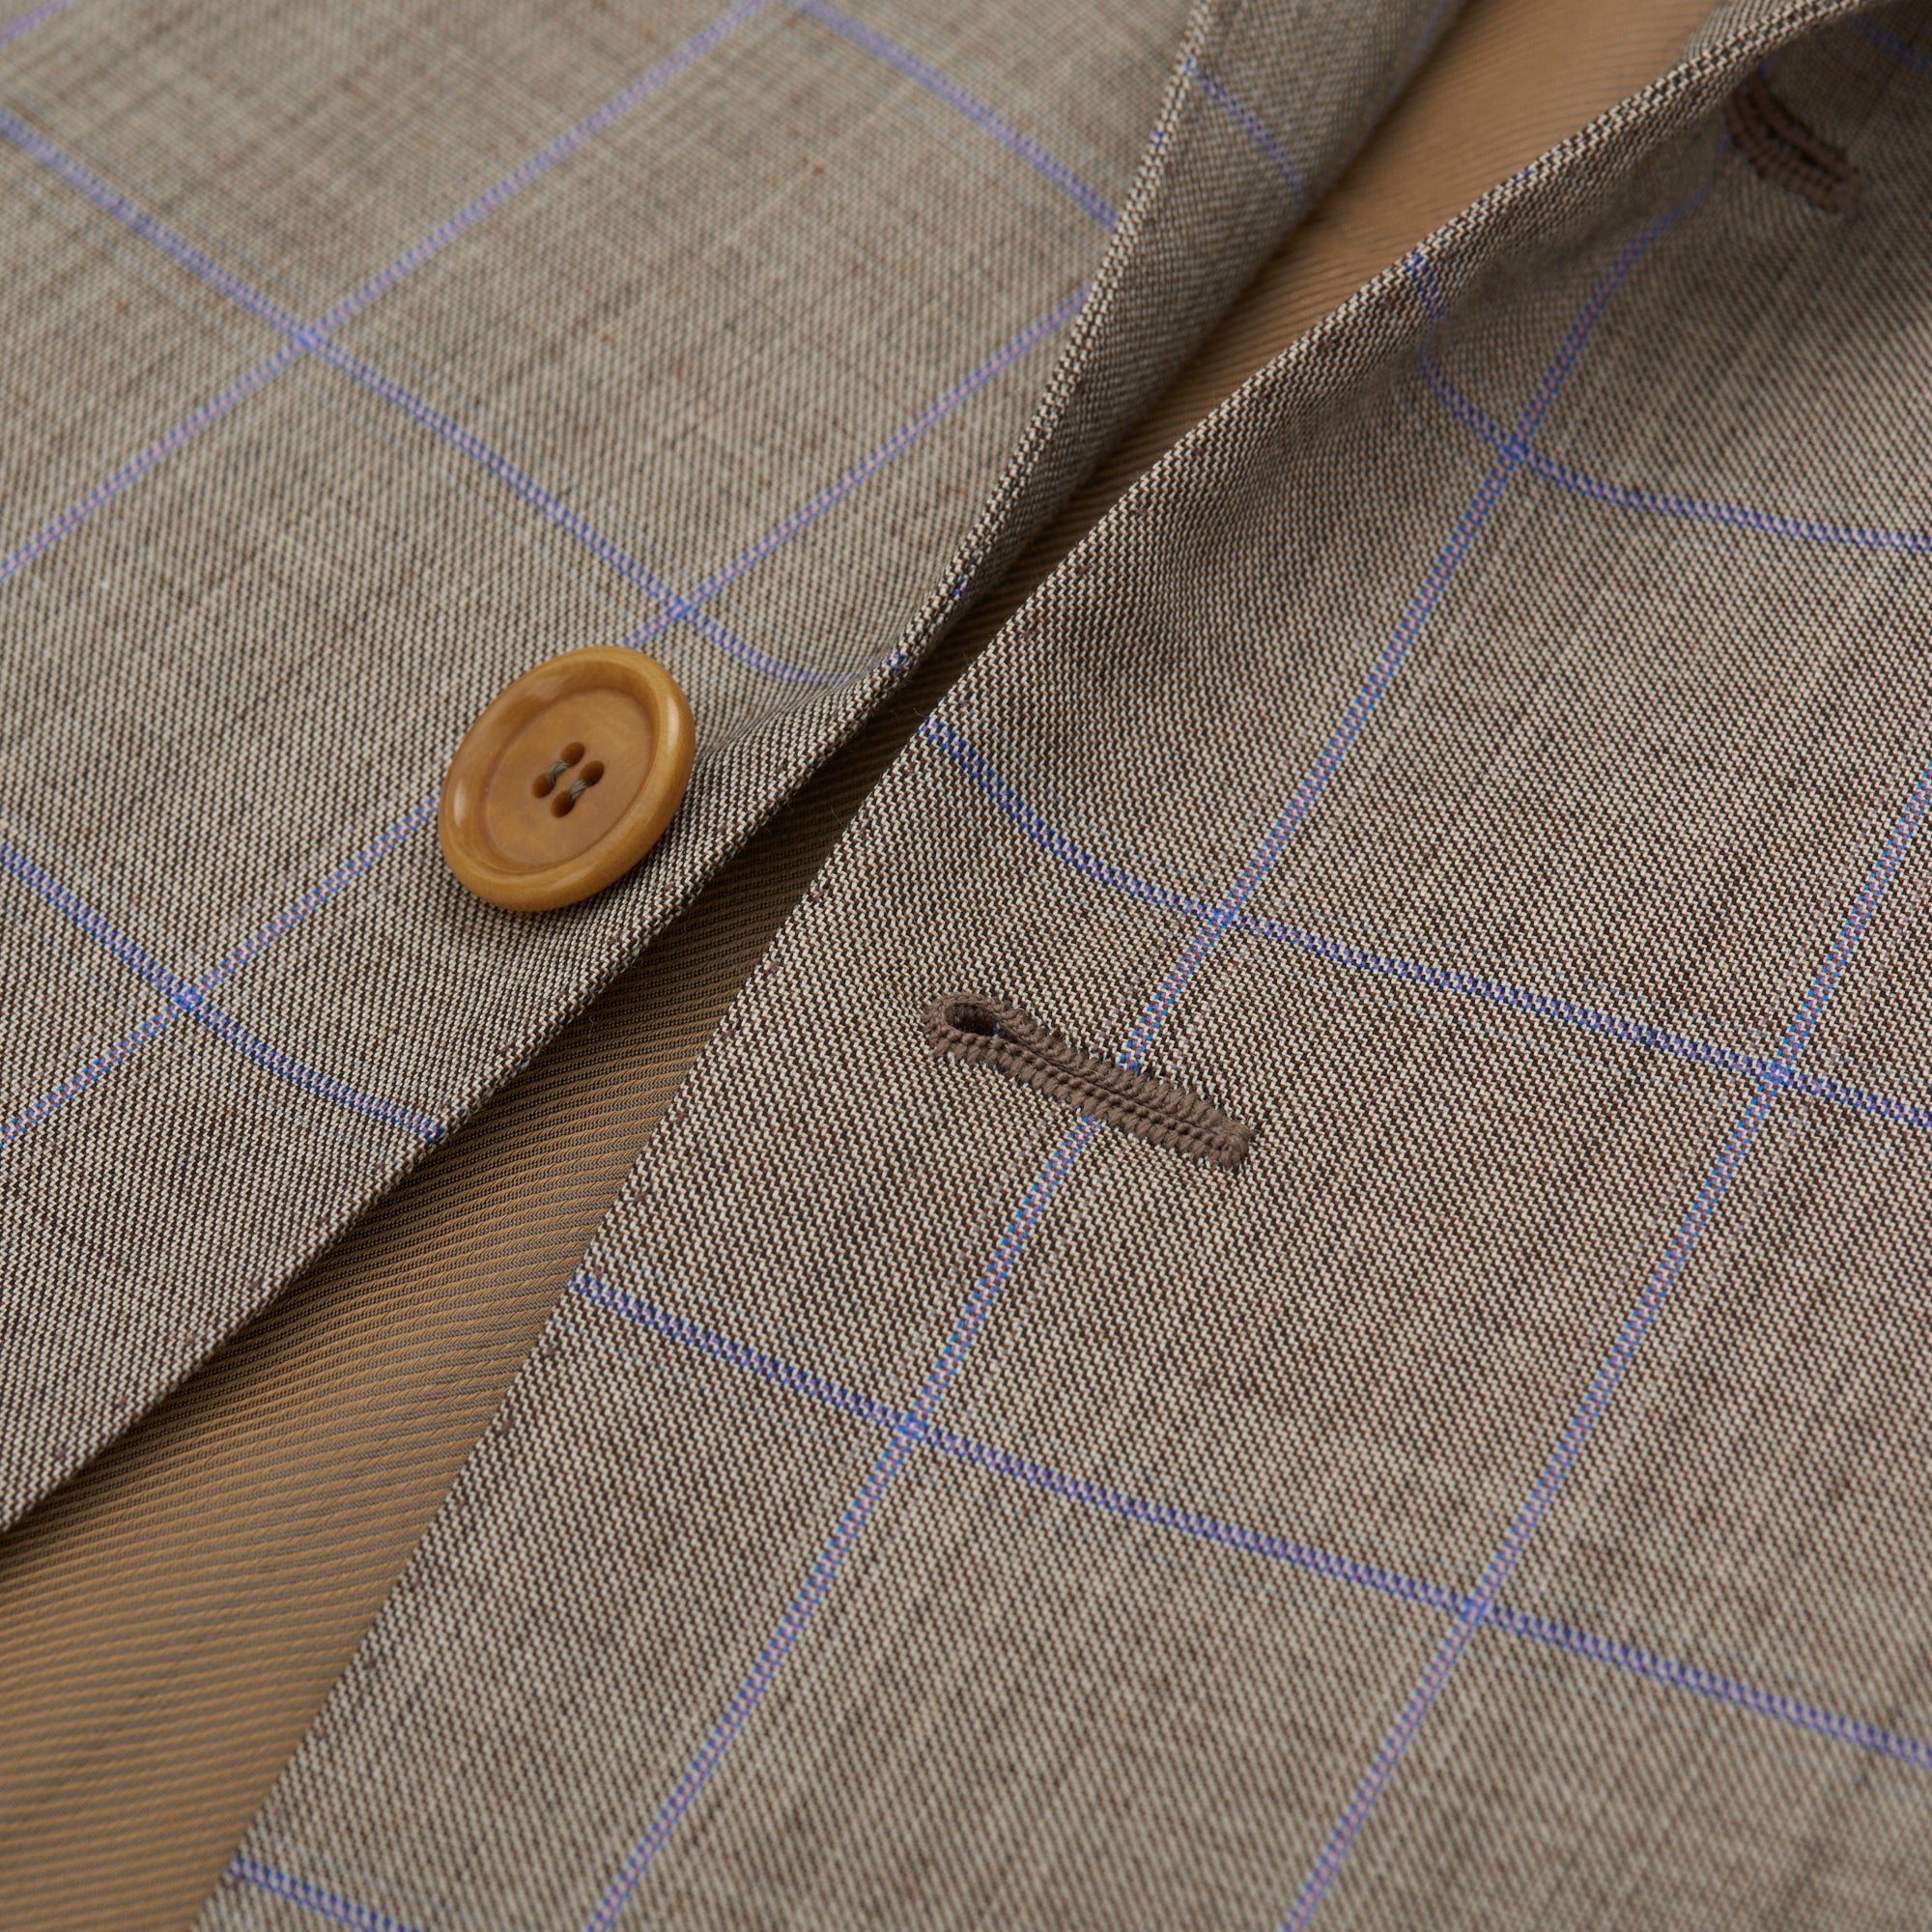 CESARE ATTOLINI Napoli Handmade Gray Plaid Wool Super 130's Suit EU 52 NEW US 42 CESARE ATTOLINI